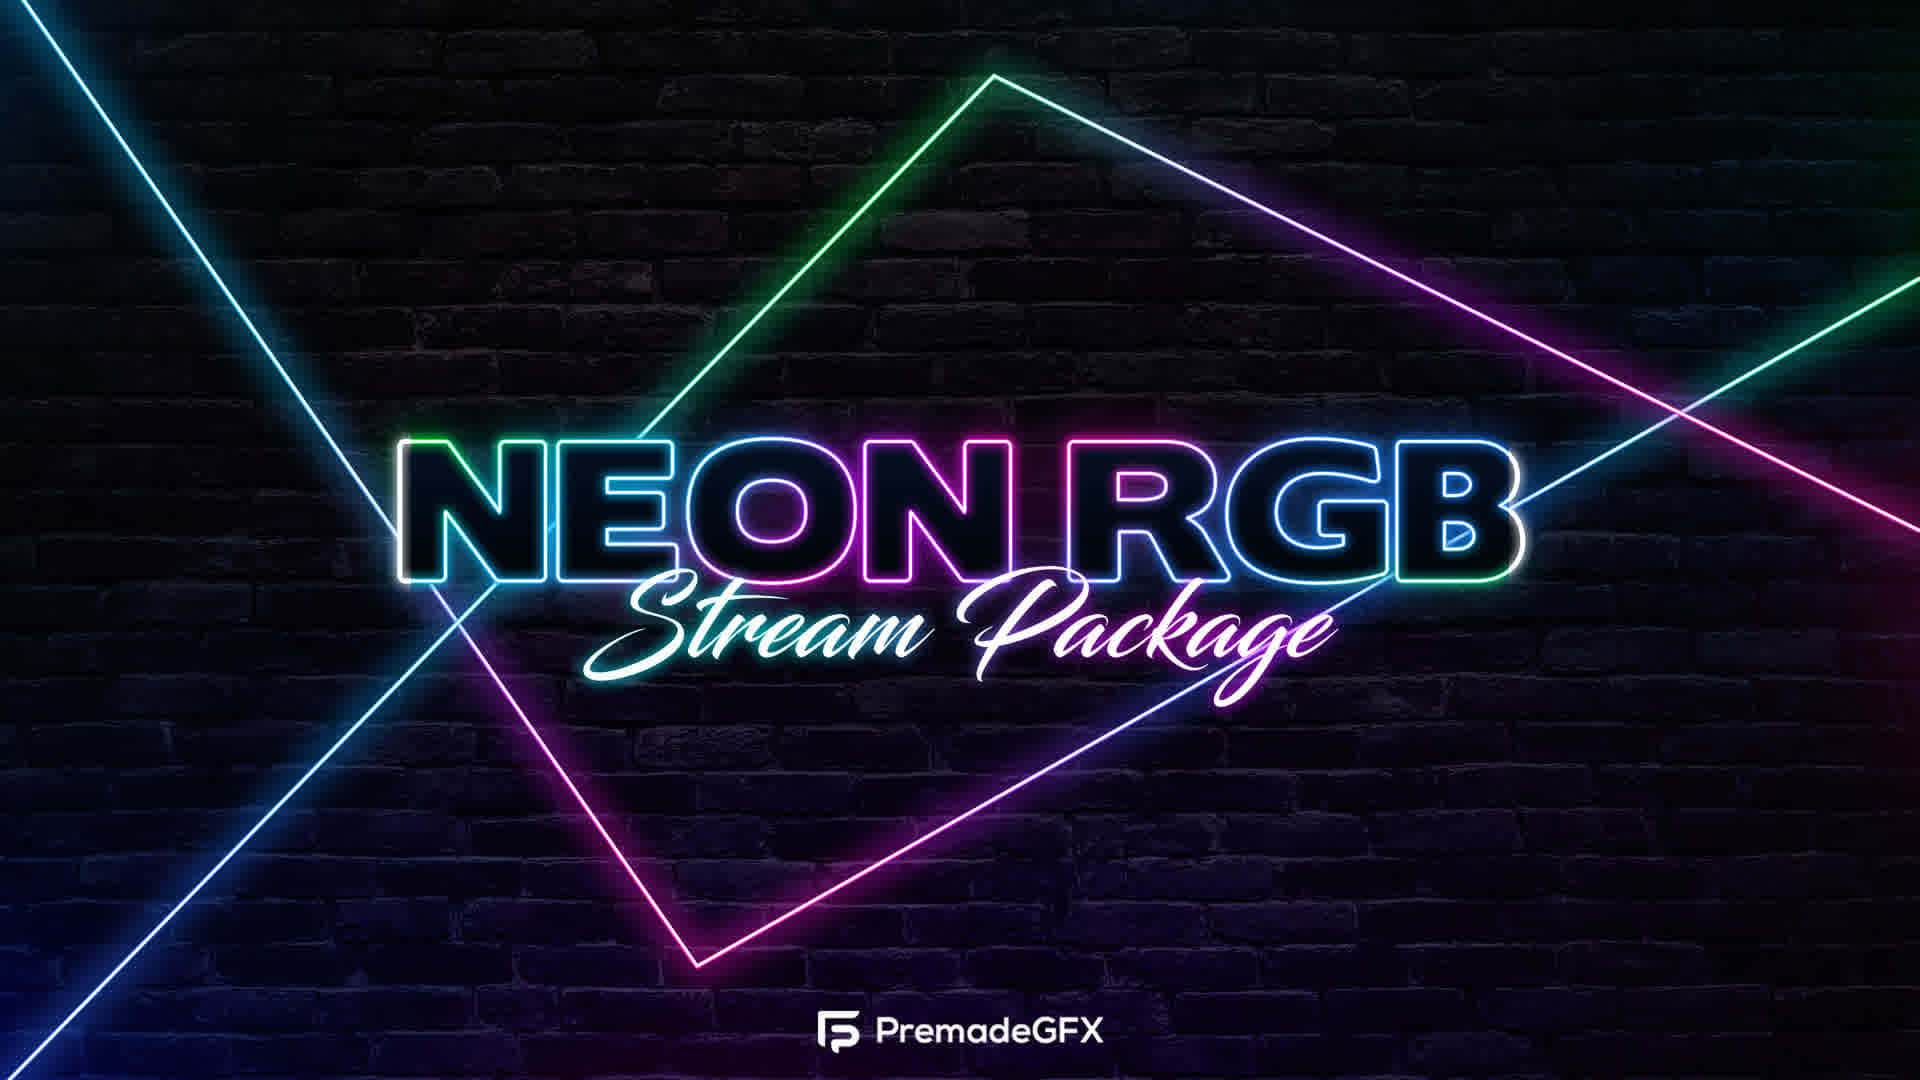 Neon Rgb Stream Package Wallpaper